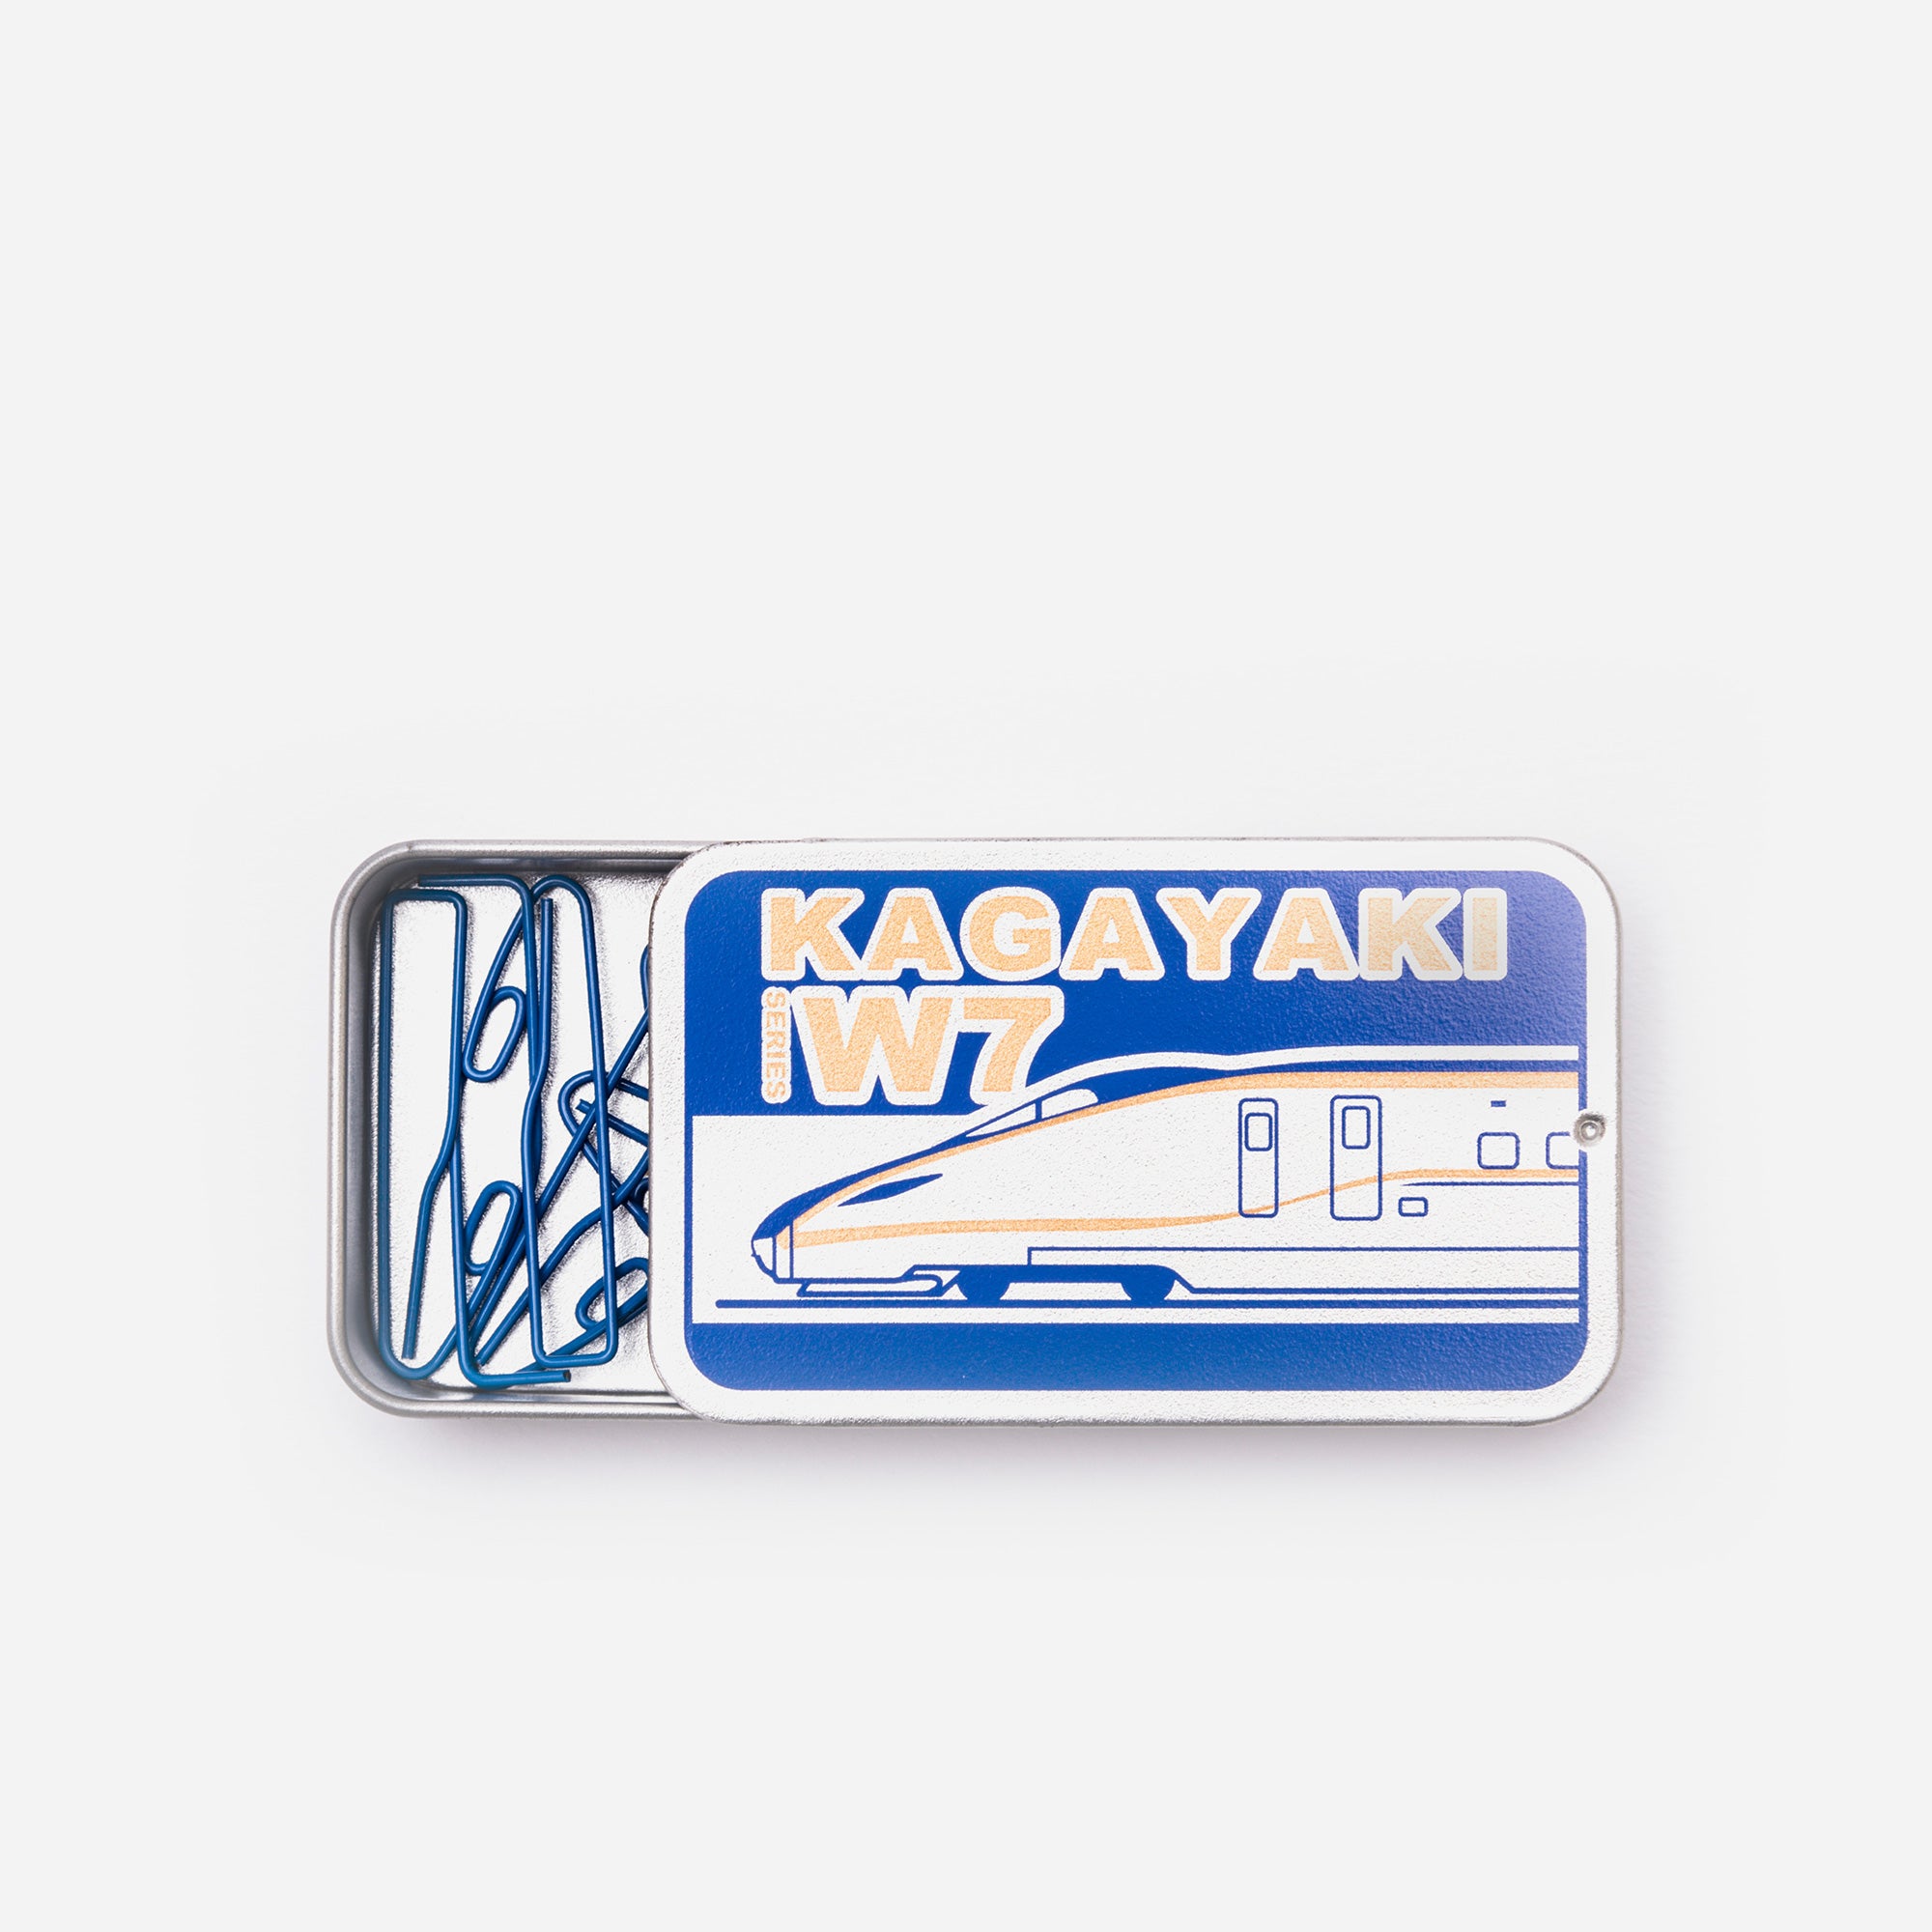 Kagayaki W7 Paper clip